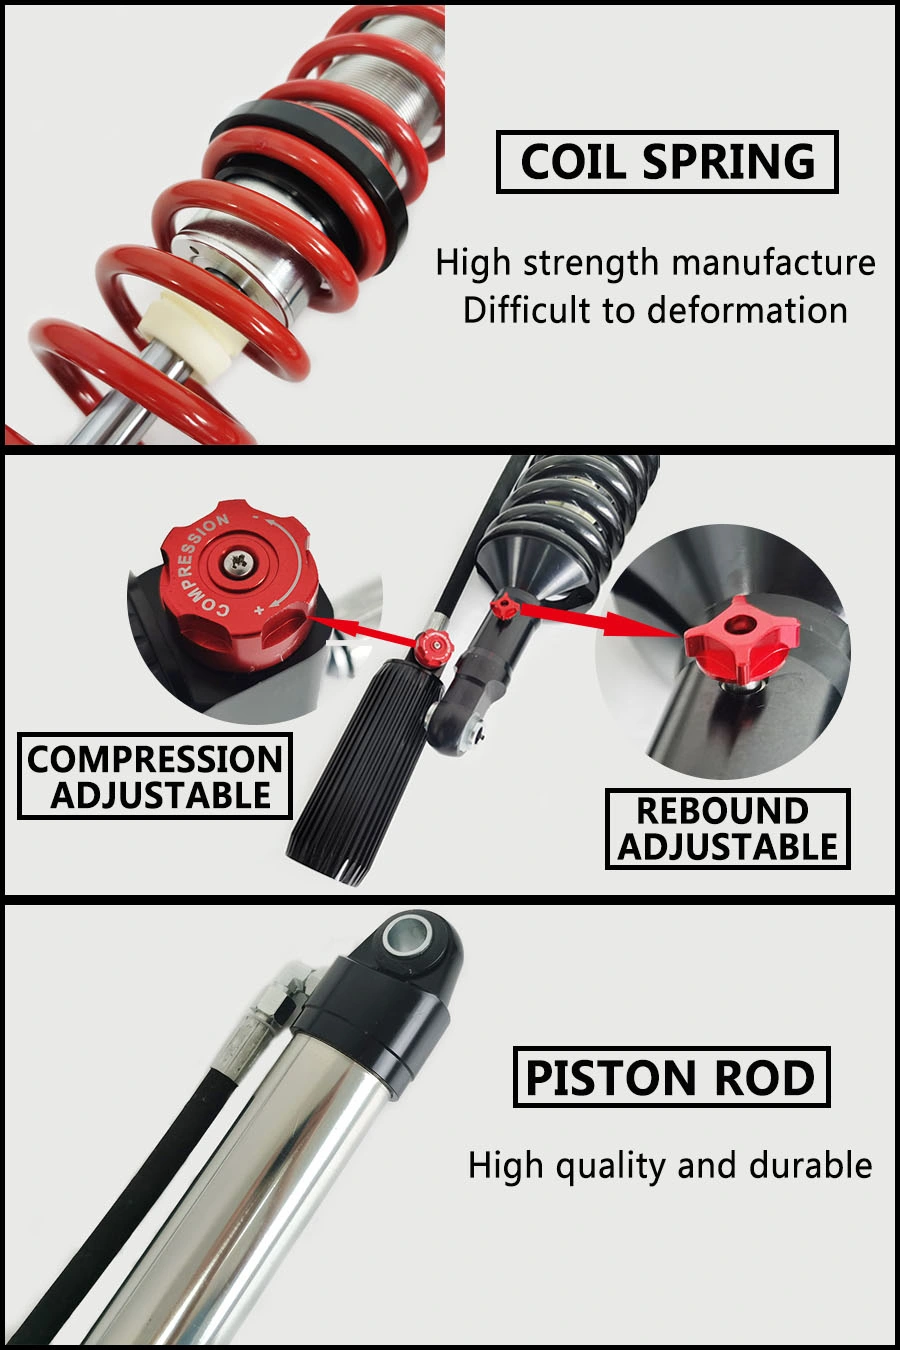 Factoyr Supplier Gdst Nitrogen Gas Adjustable Shock Absorber Suspension Lift Kit for Ford F150 2014